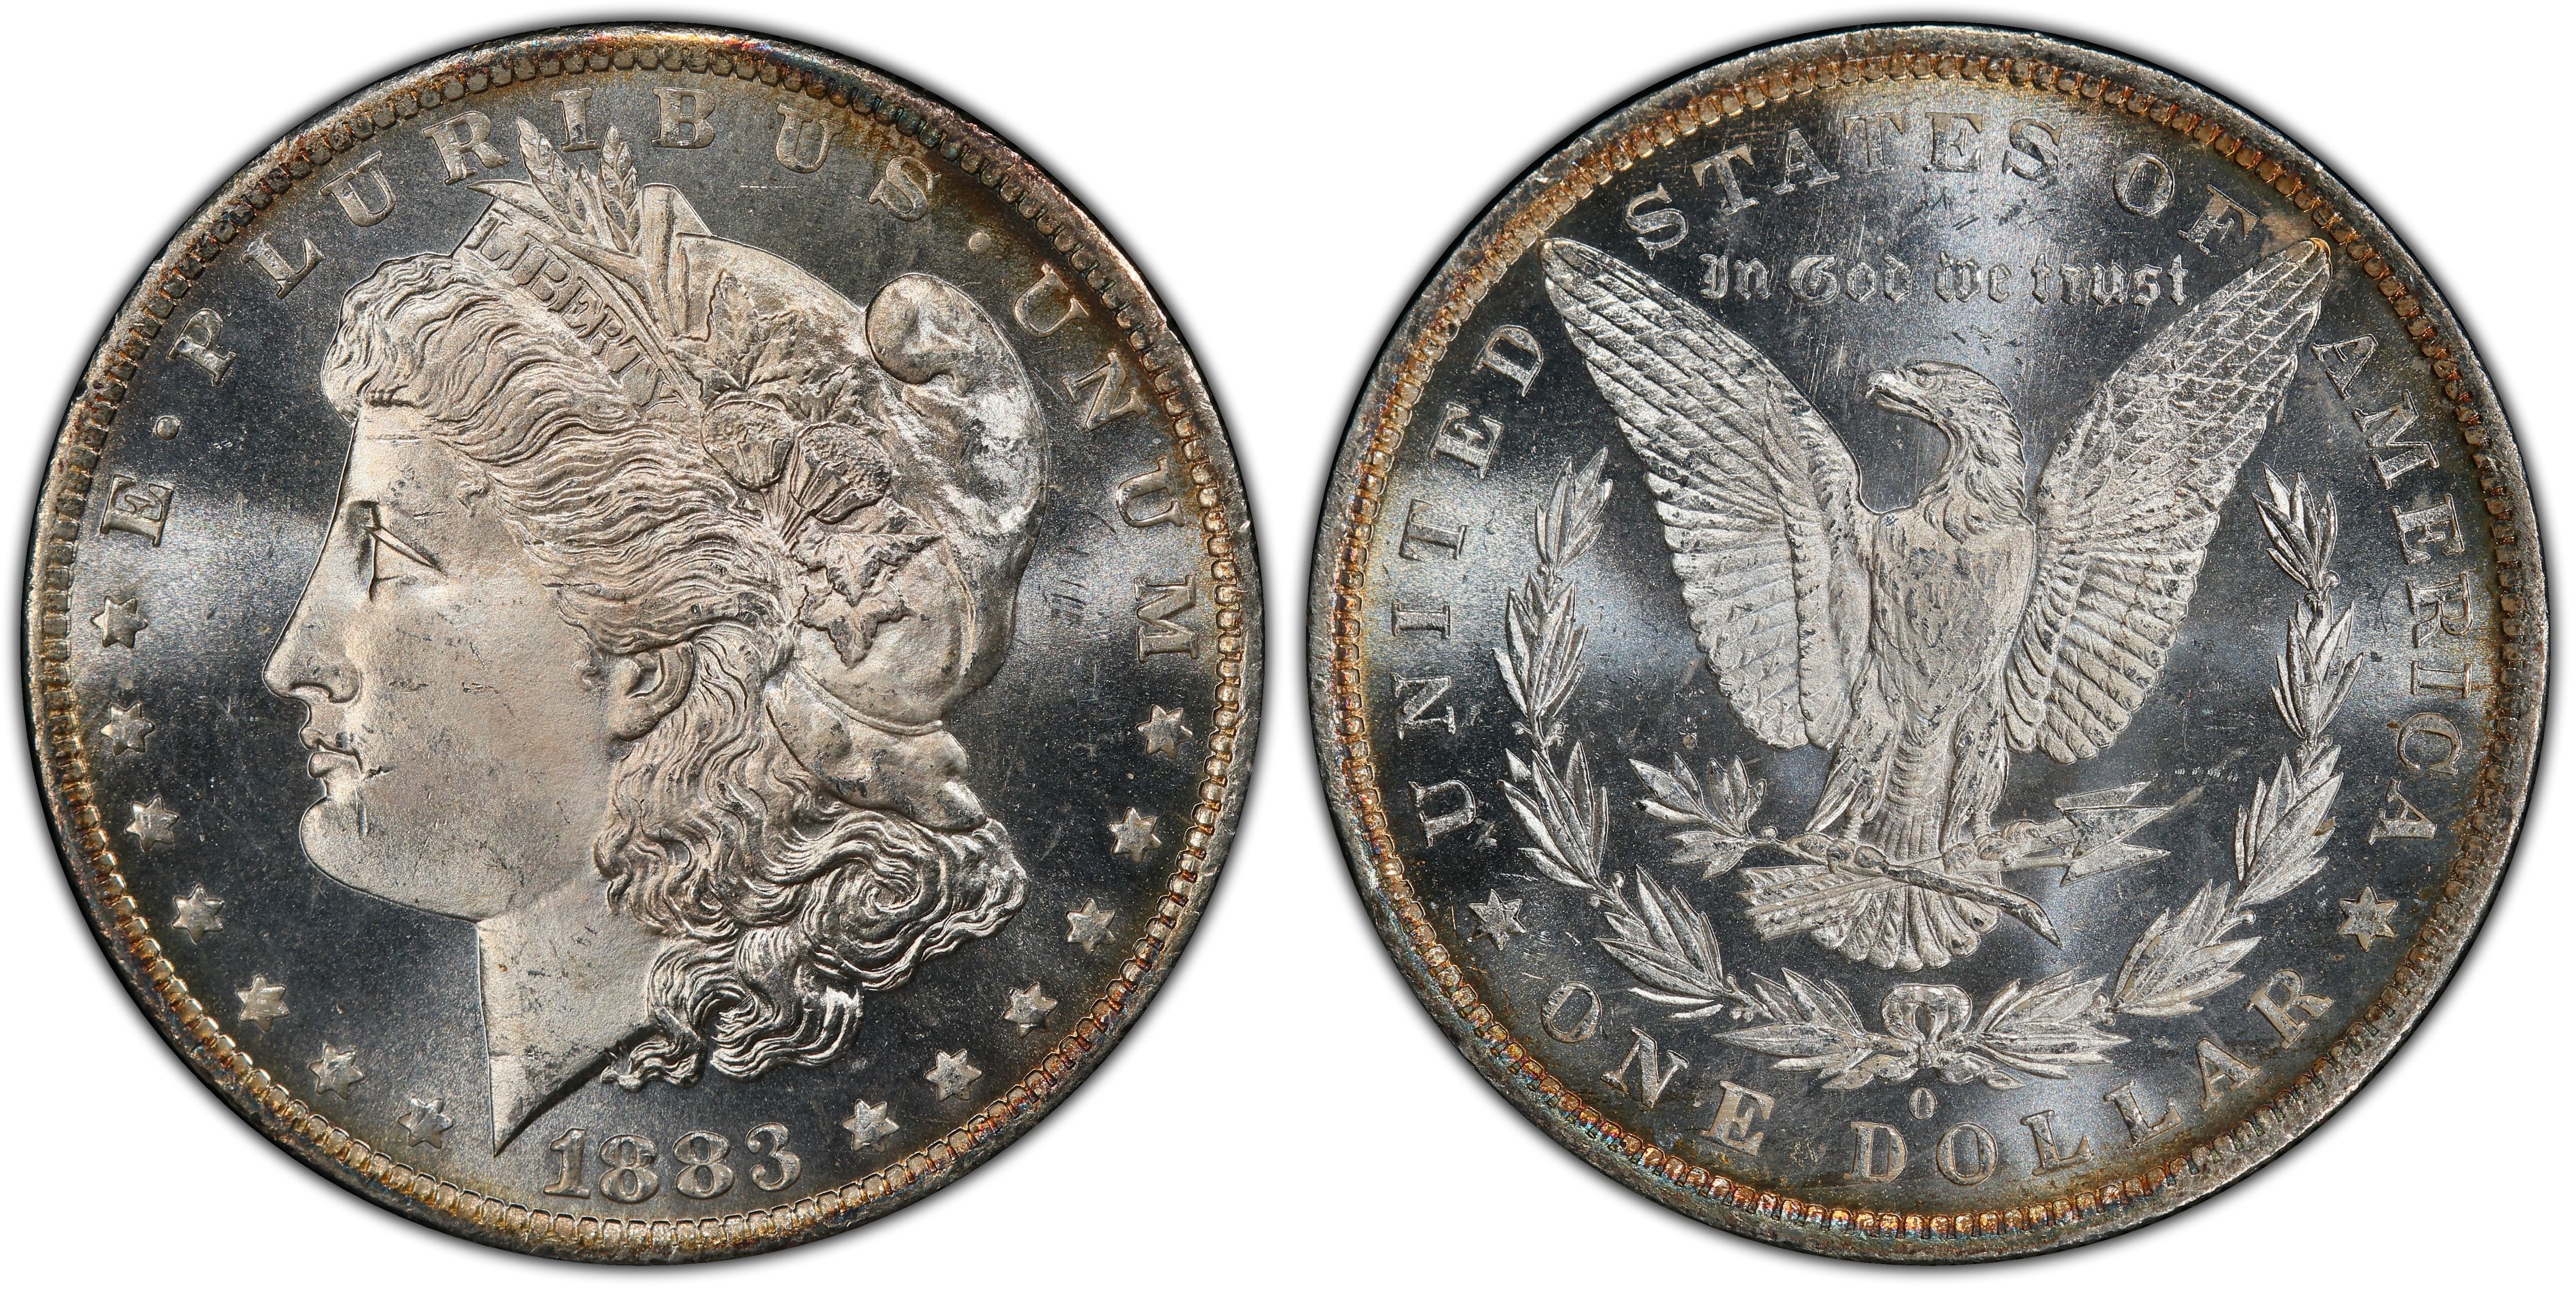 1883-O $1, PL (Regular Strike) Morgan Dollar - PCGS CoinFacts